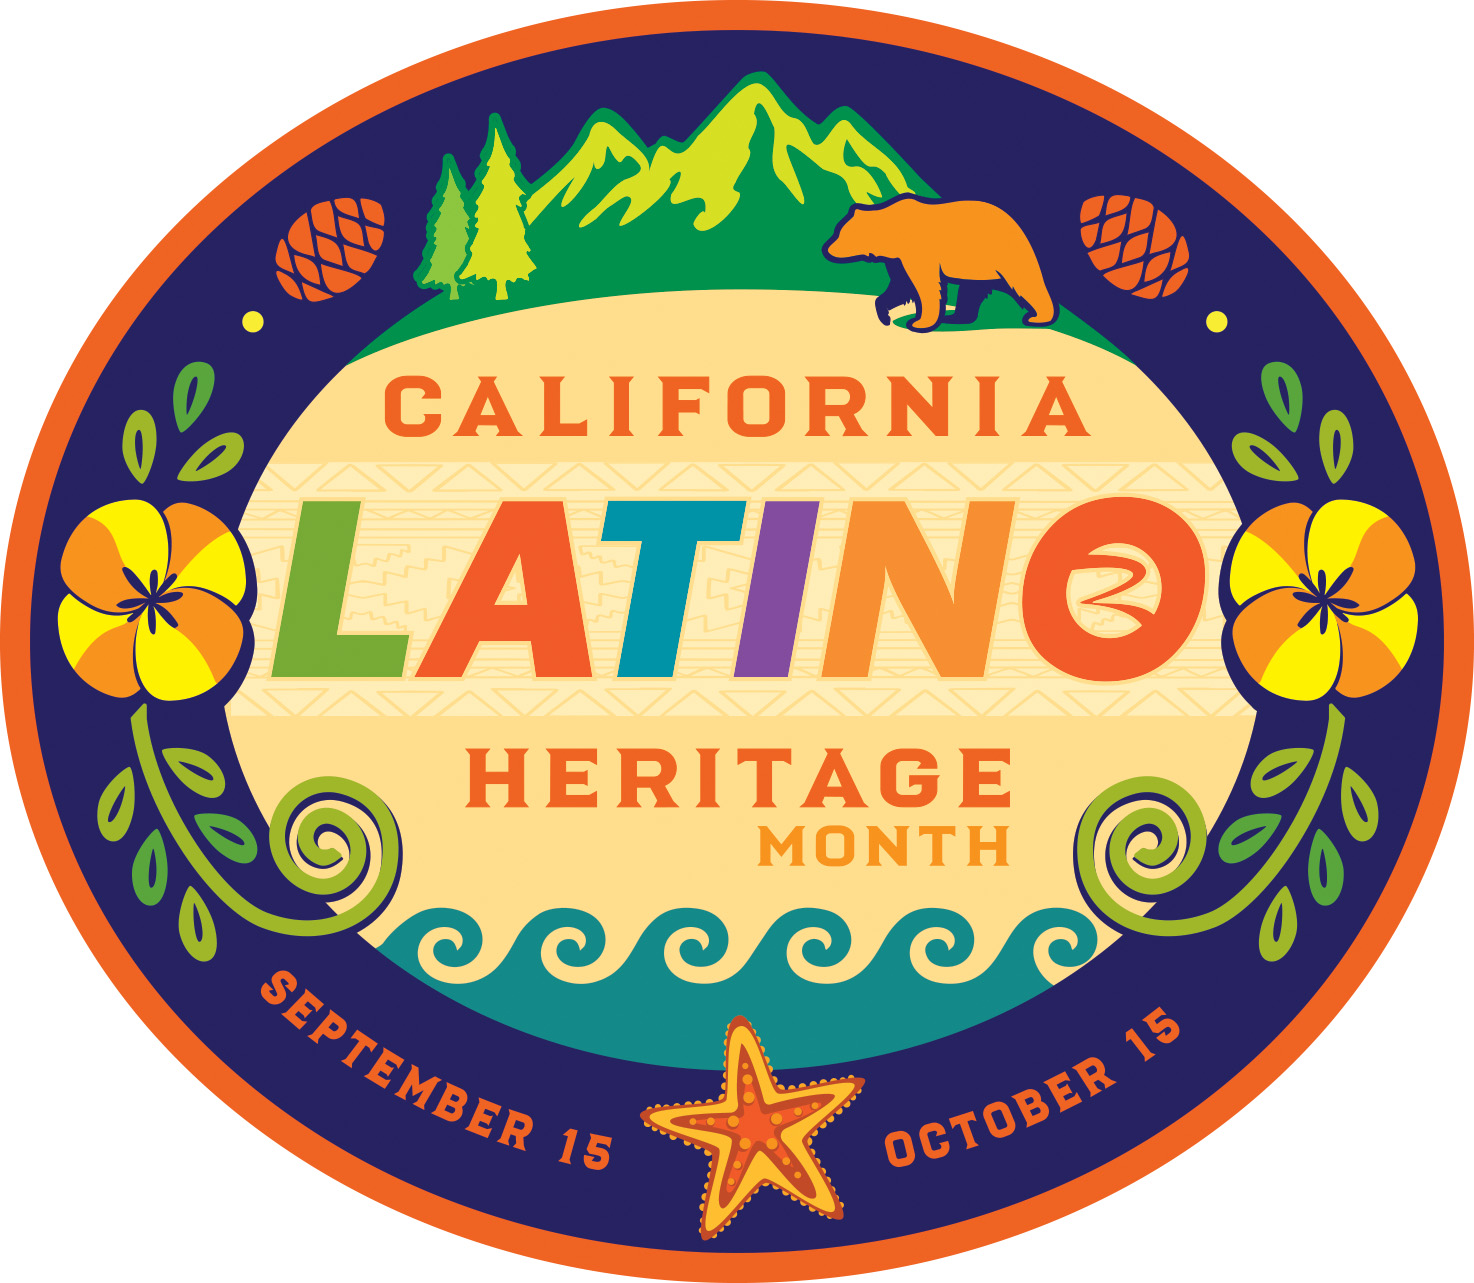 hispanic heritage logo